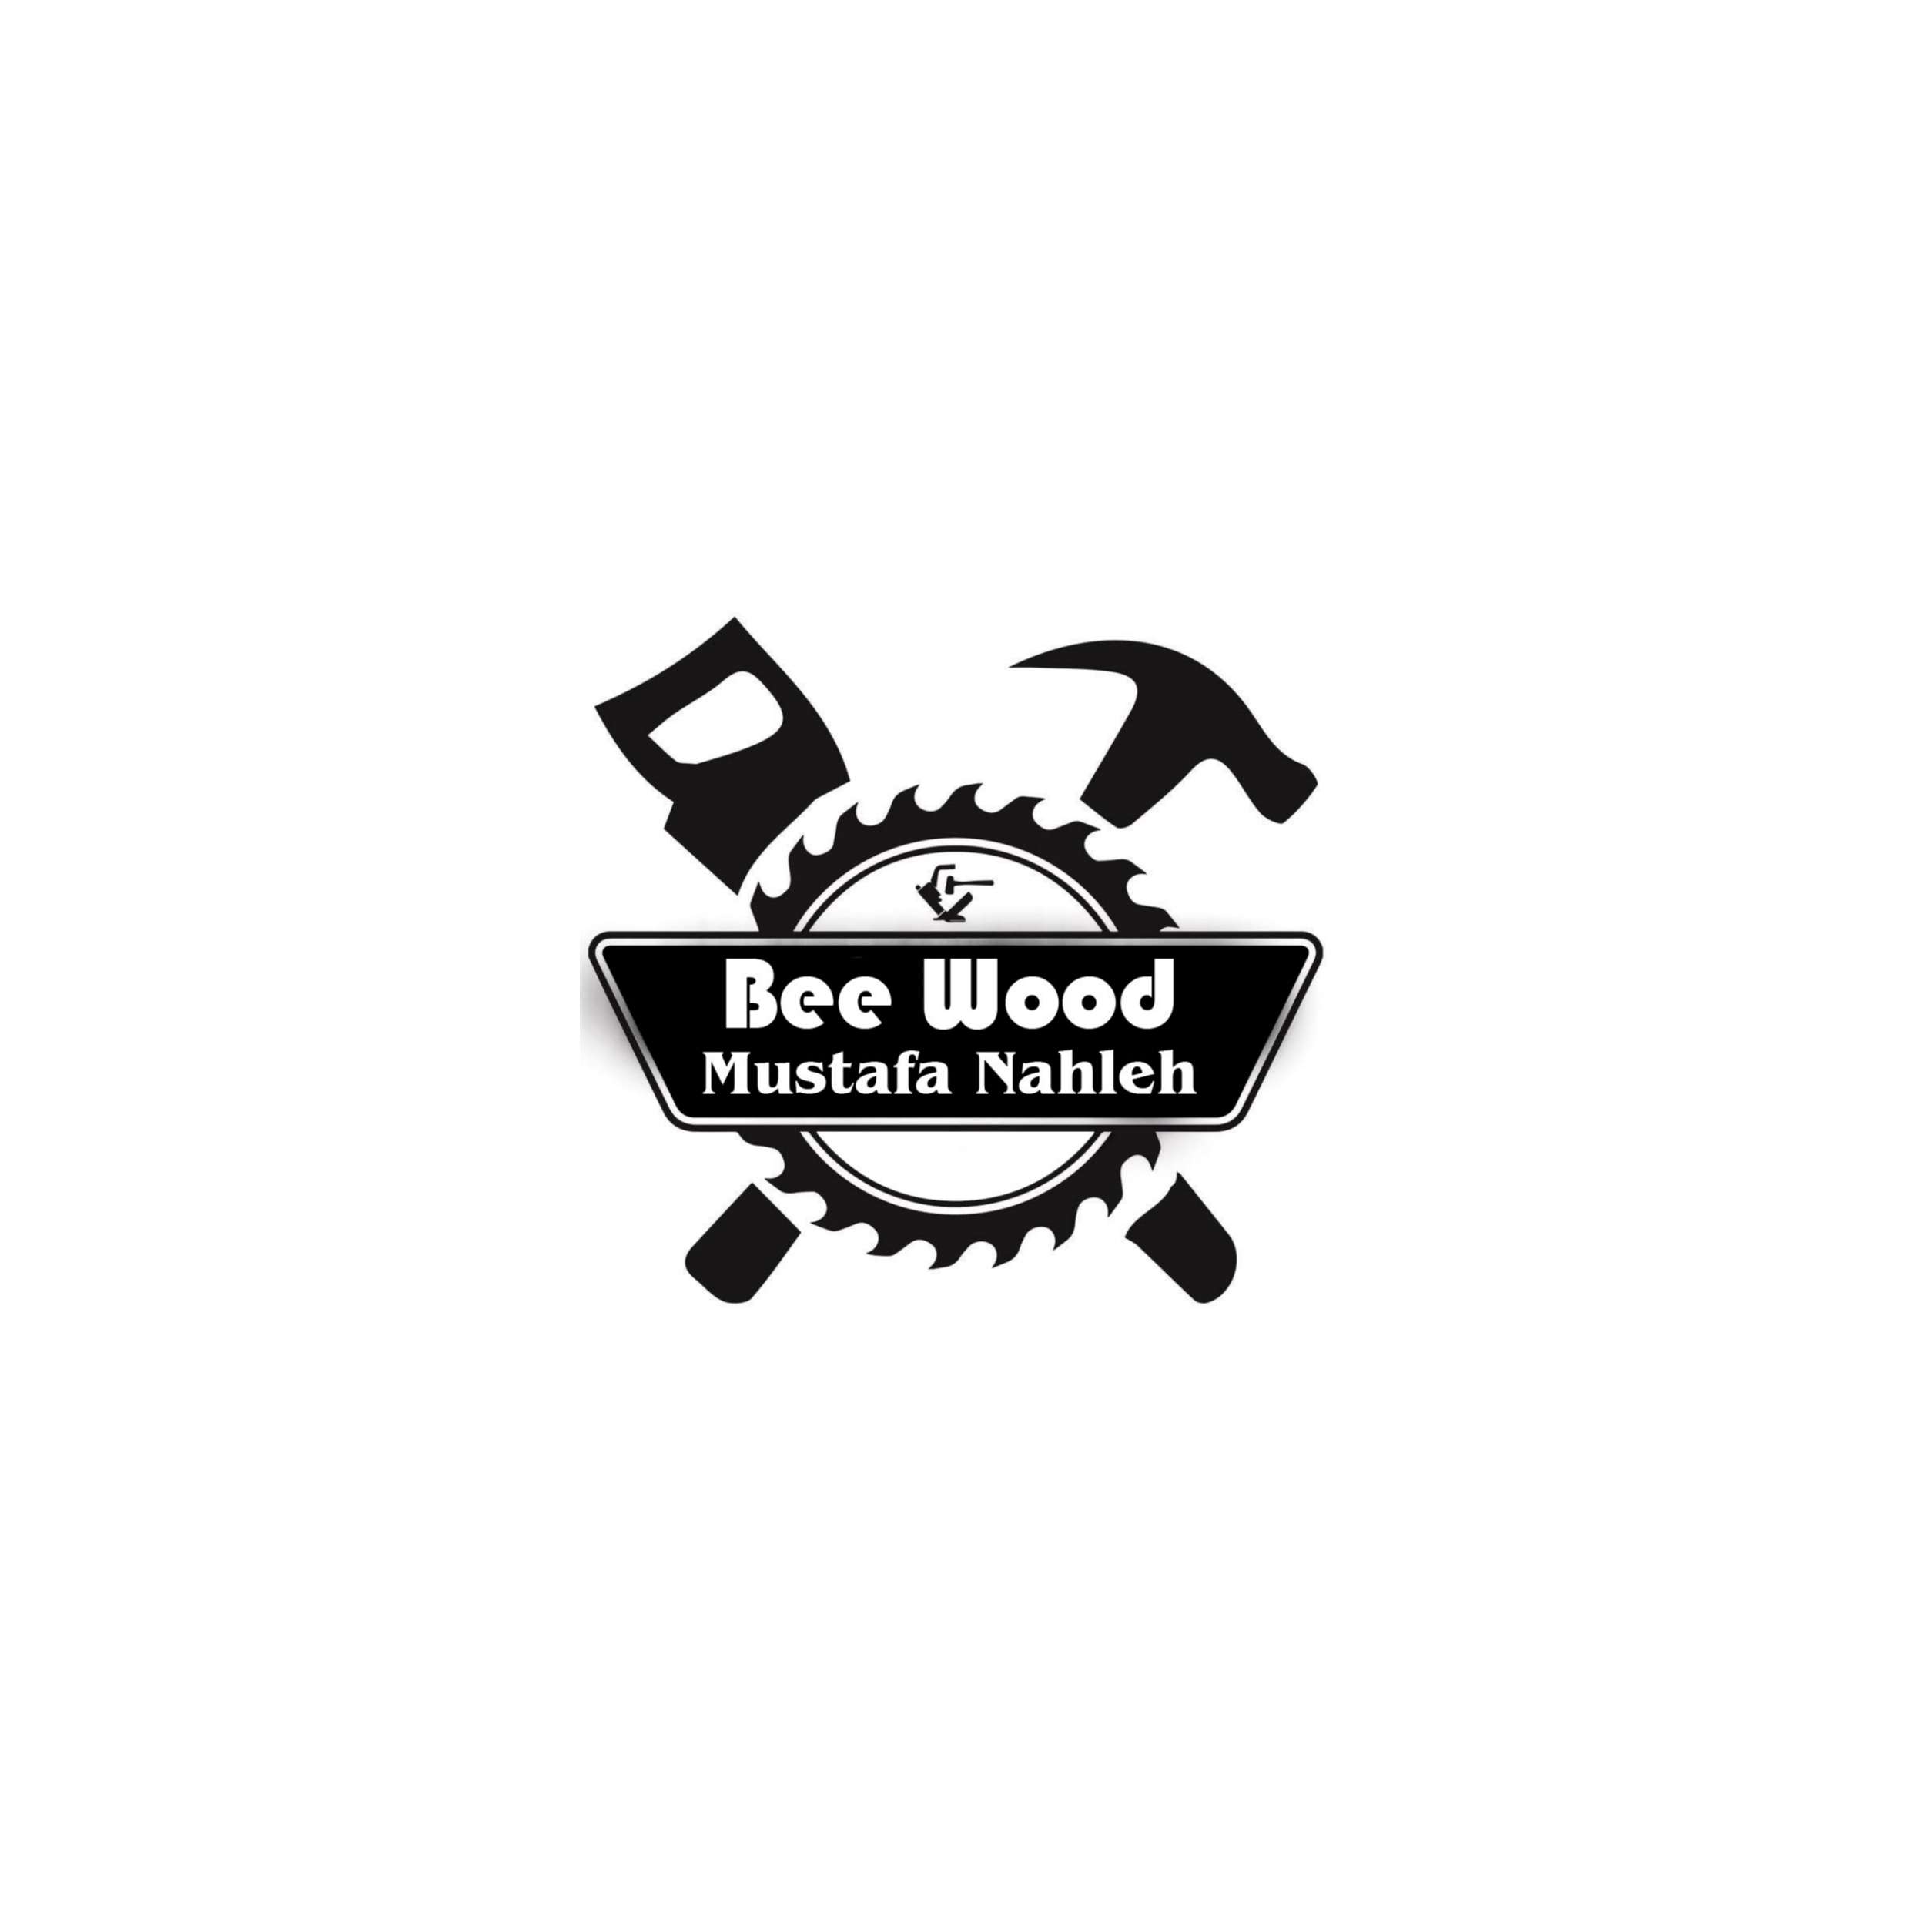 Bee wood